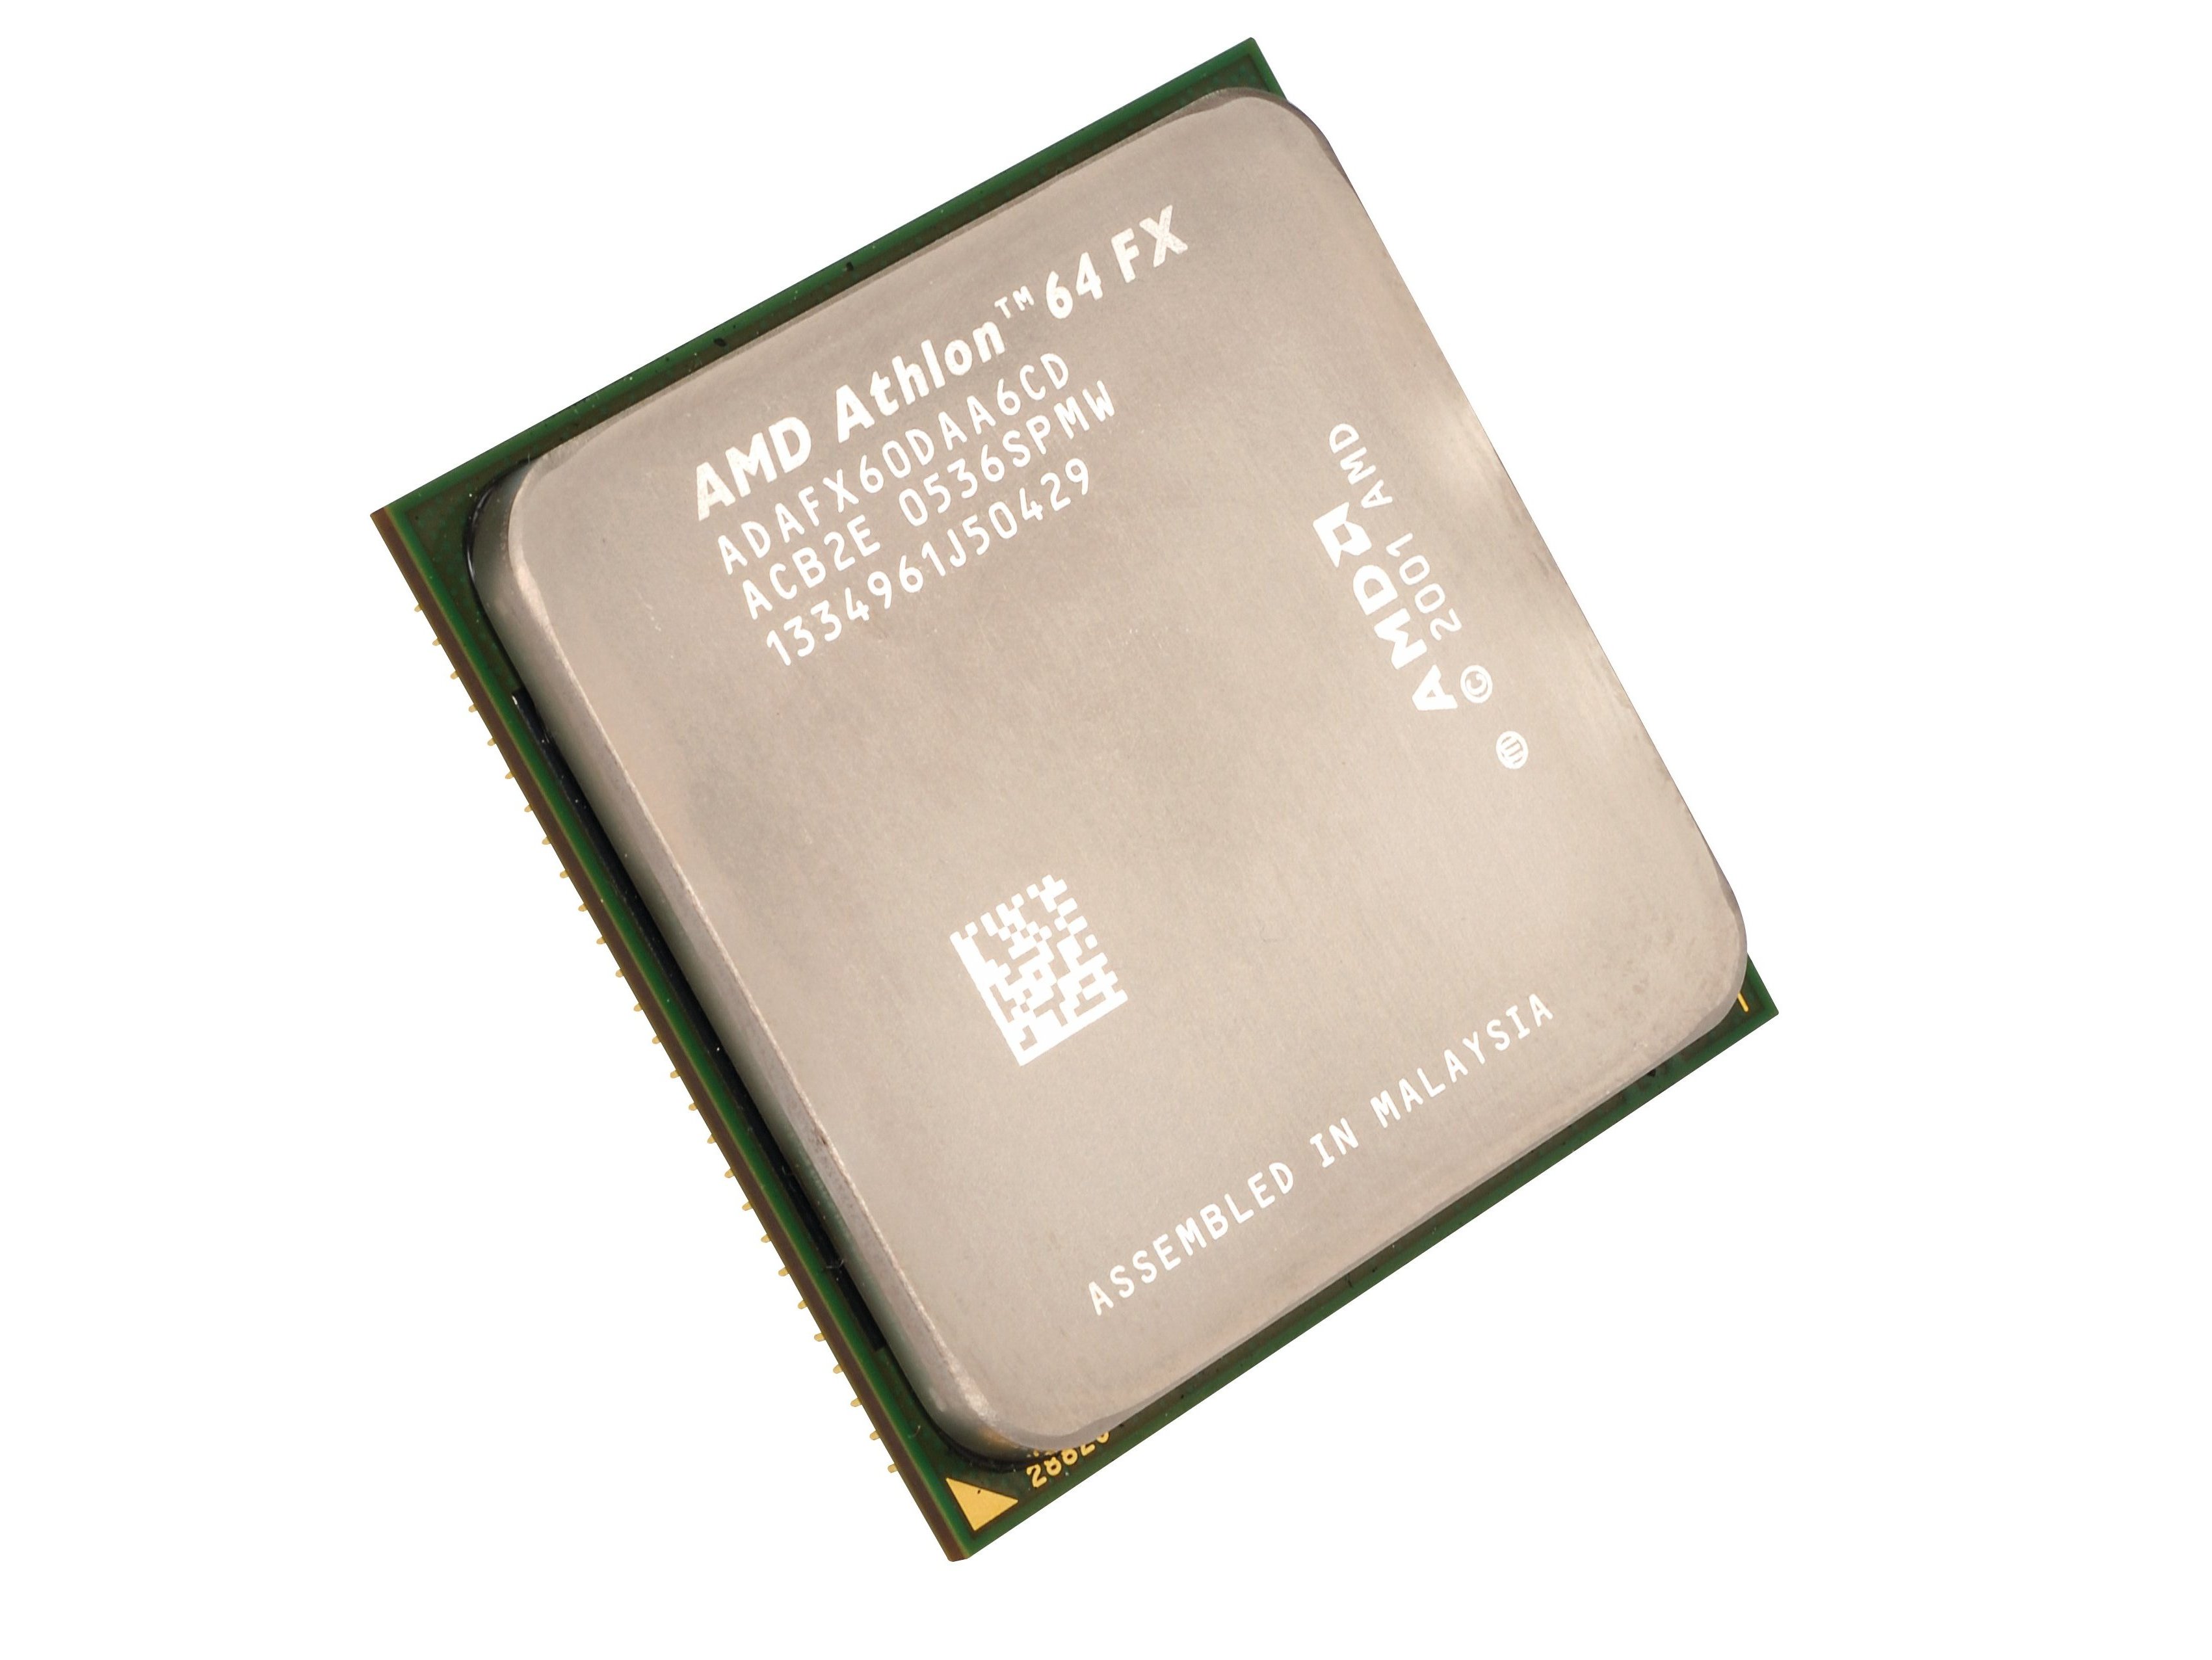 Amd 64 4400. Процессор АМД Атлон 64. Процессор AMD Athlon 64 Socket 939. Athlon 64 FX. AMD Athlon 64 x2 FX-60.